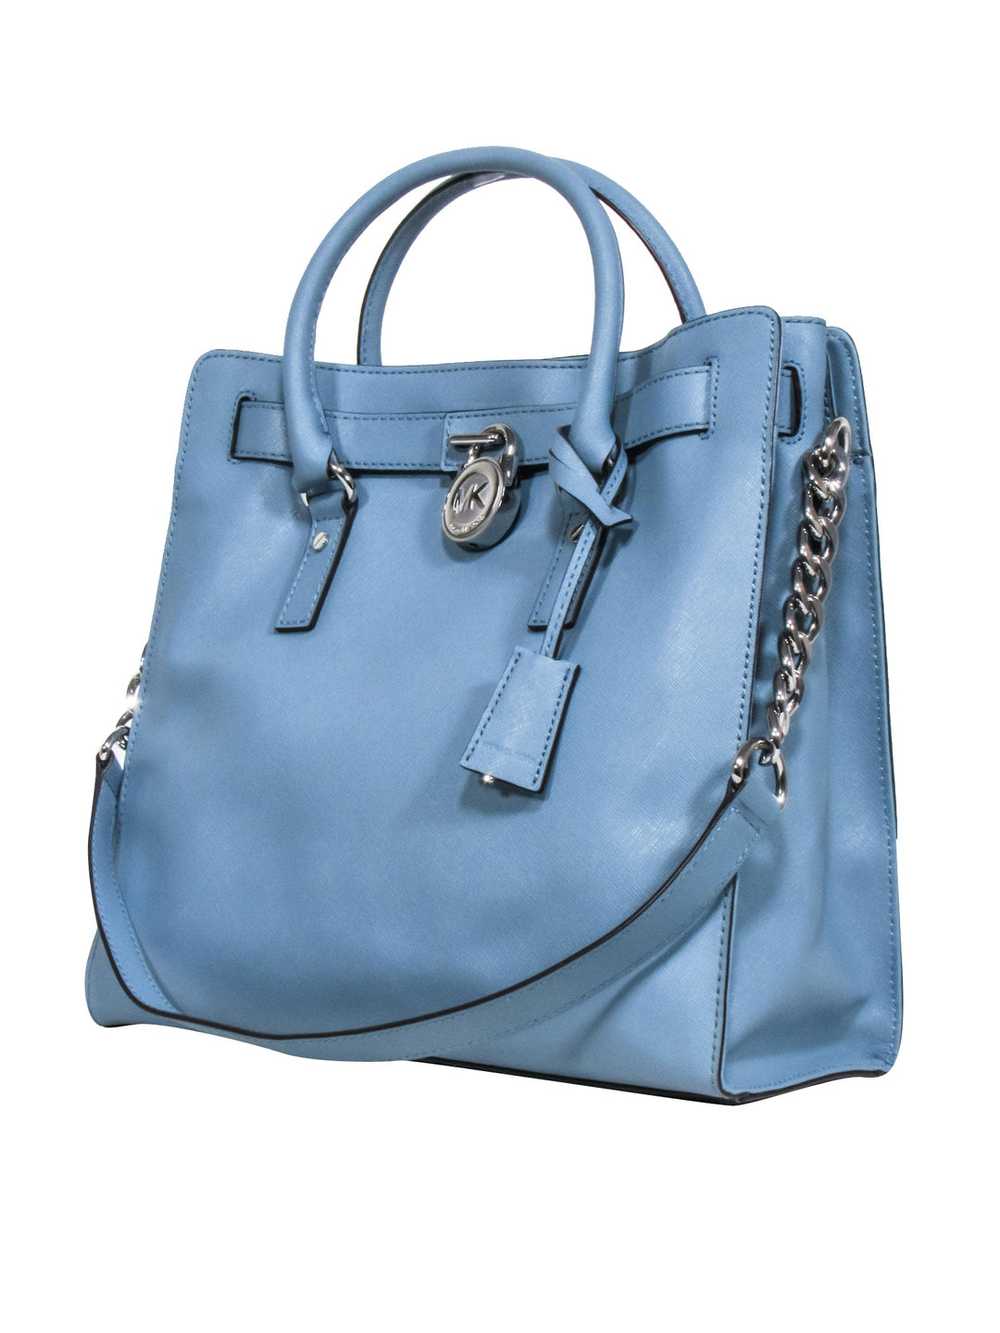 Michael Kors -Light Blue Leather Tote Bag - image 2